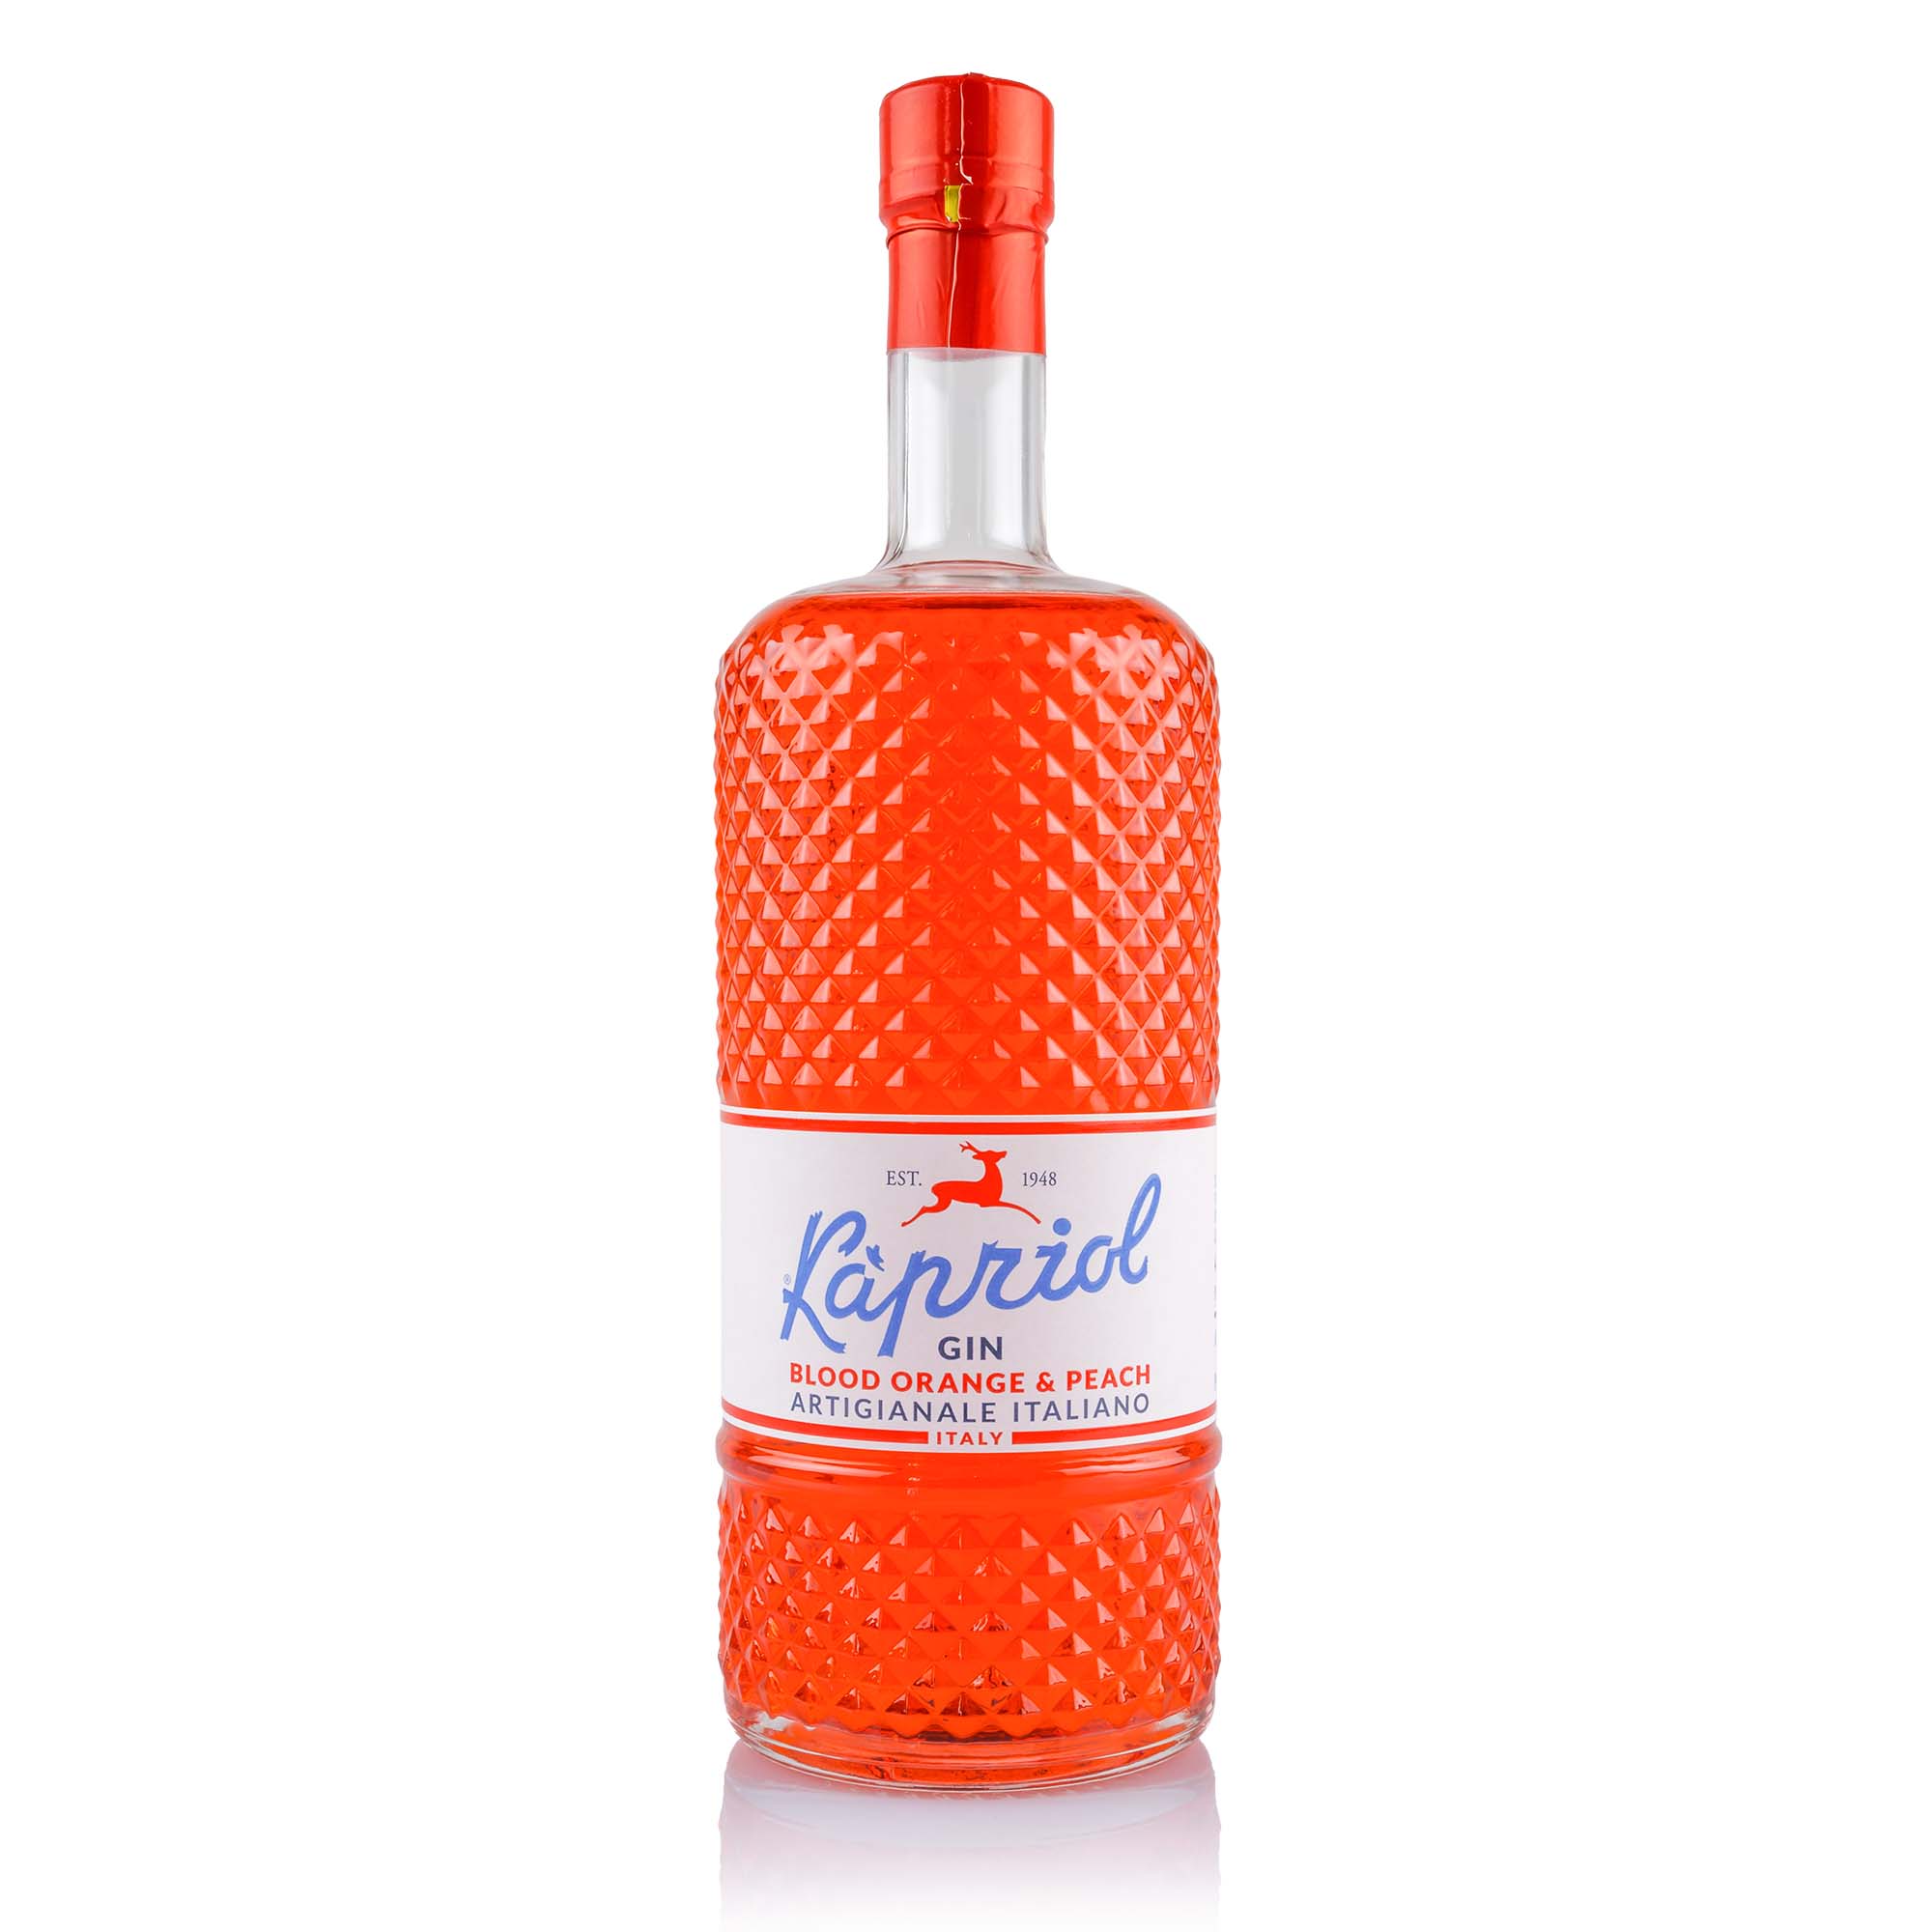 Gin Kapriol Blood orange & Peach, 70cl